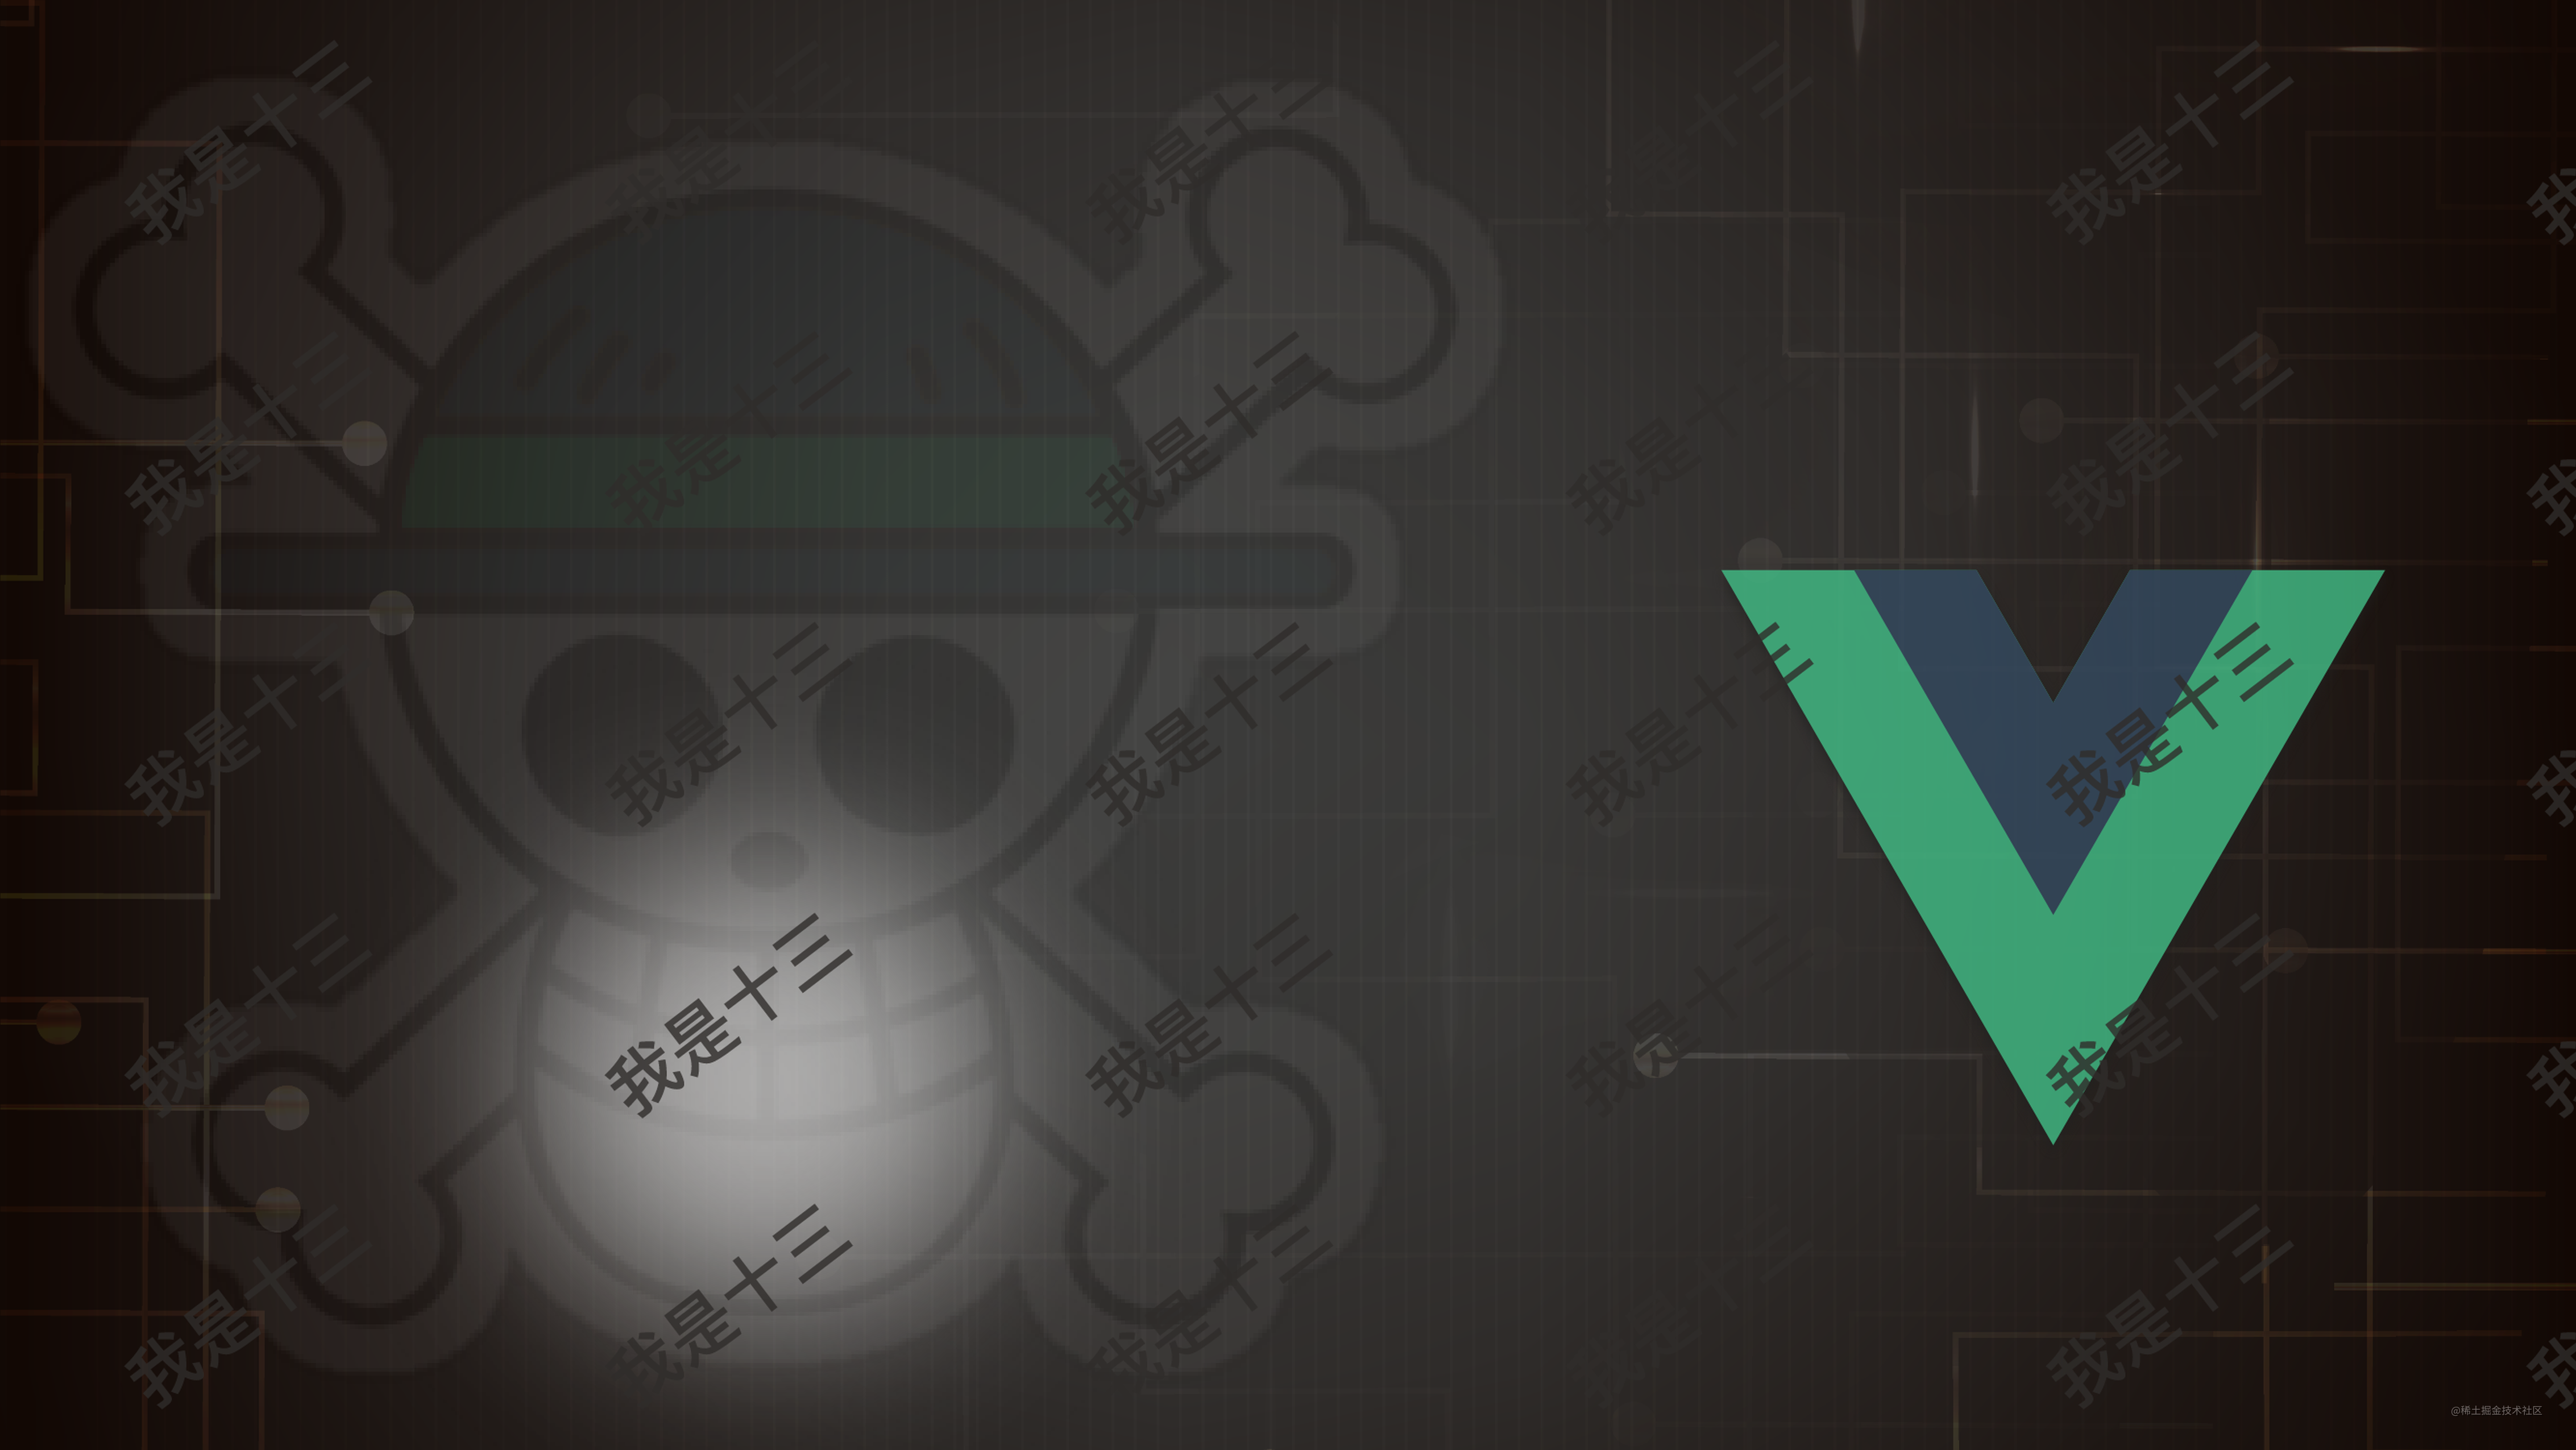 Vue3 来了，Vue3 开源商城项目重构计划正式启动！